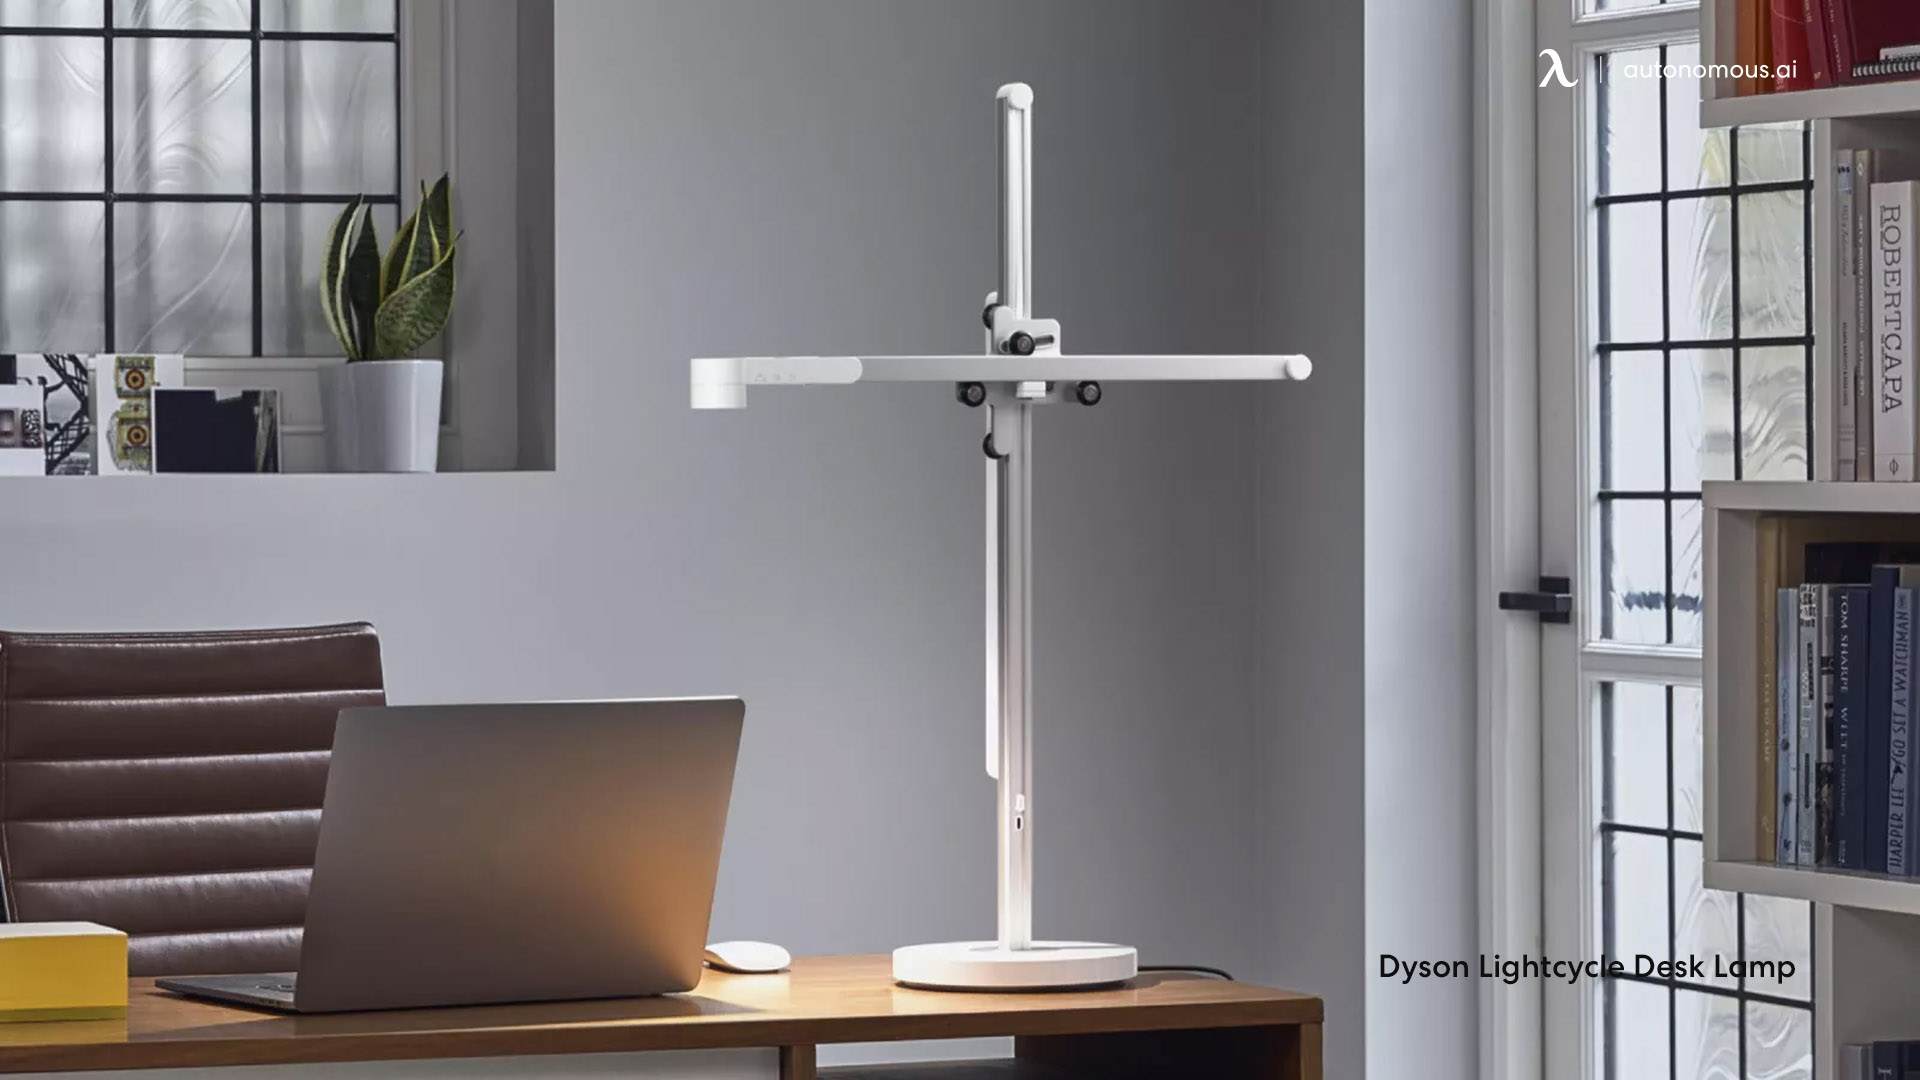 Dyson Lightcycle Desk Lamp